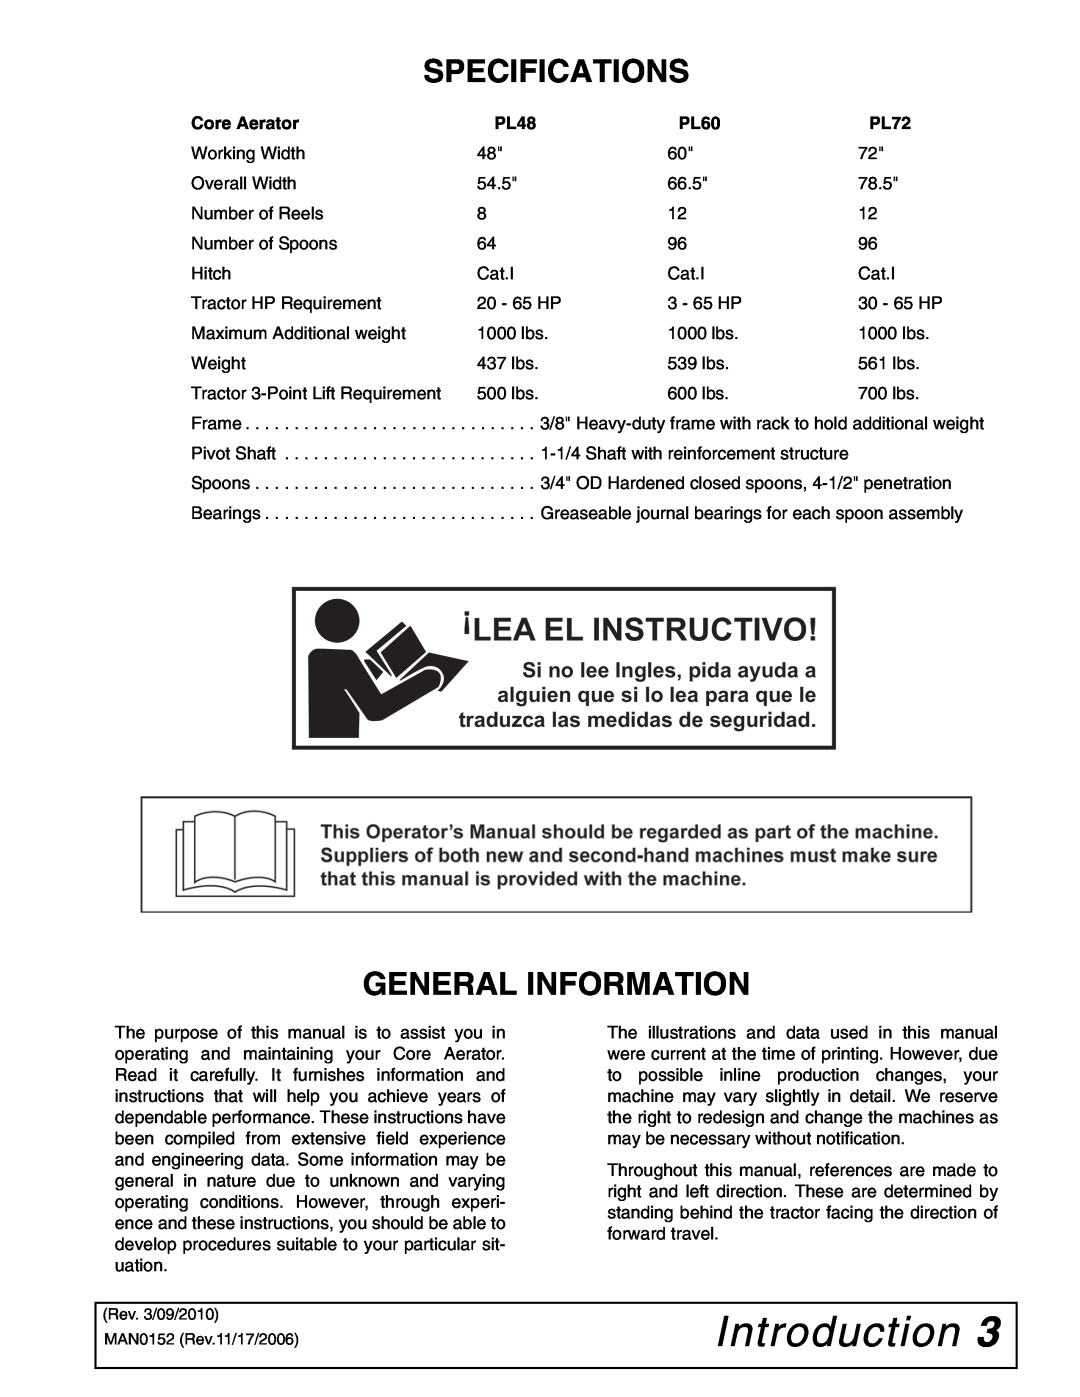 Woods Equipment PL72, PL60, PL48 manual Introduction, Specifications, General Information, Lea El Instructivo 